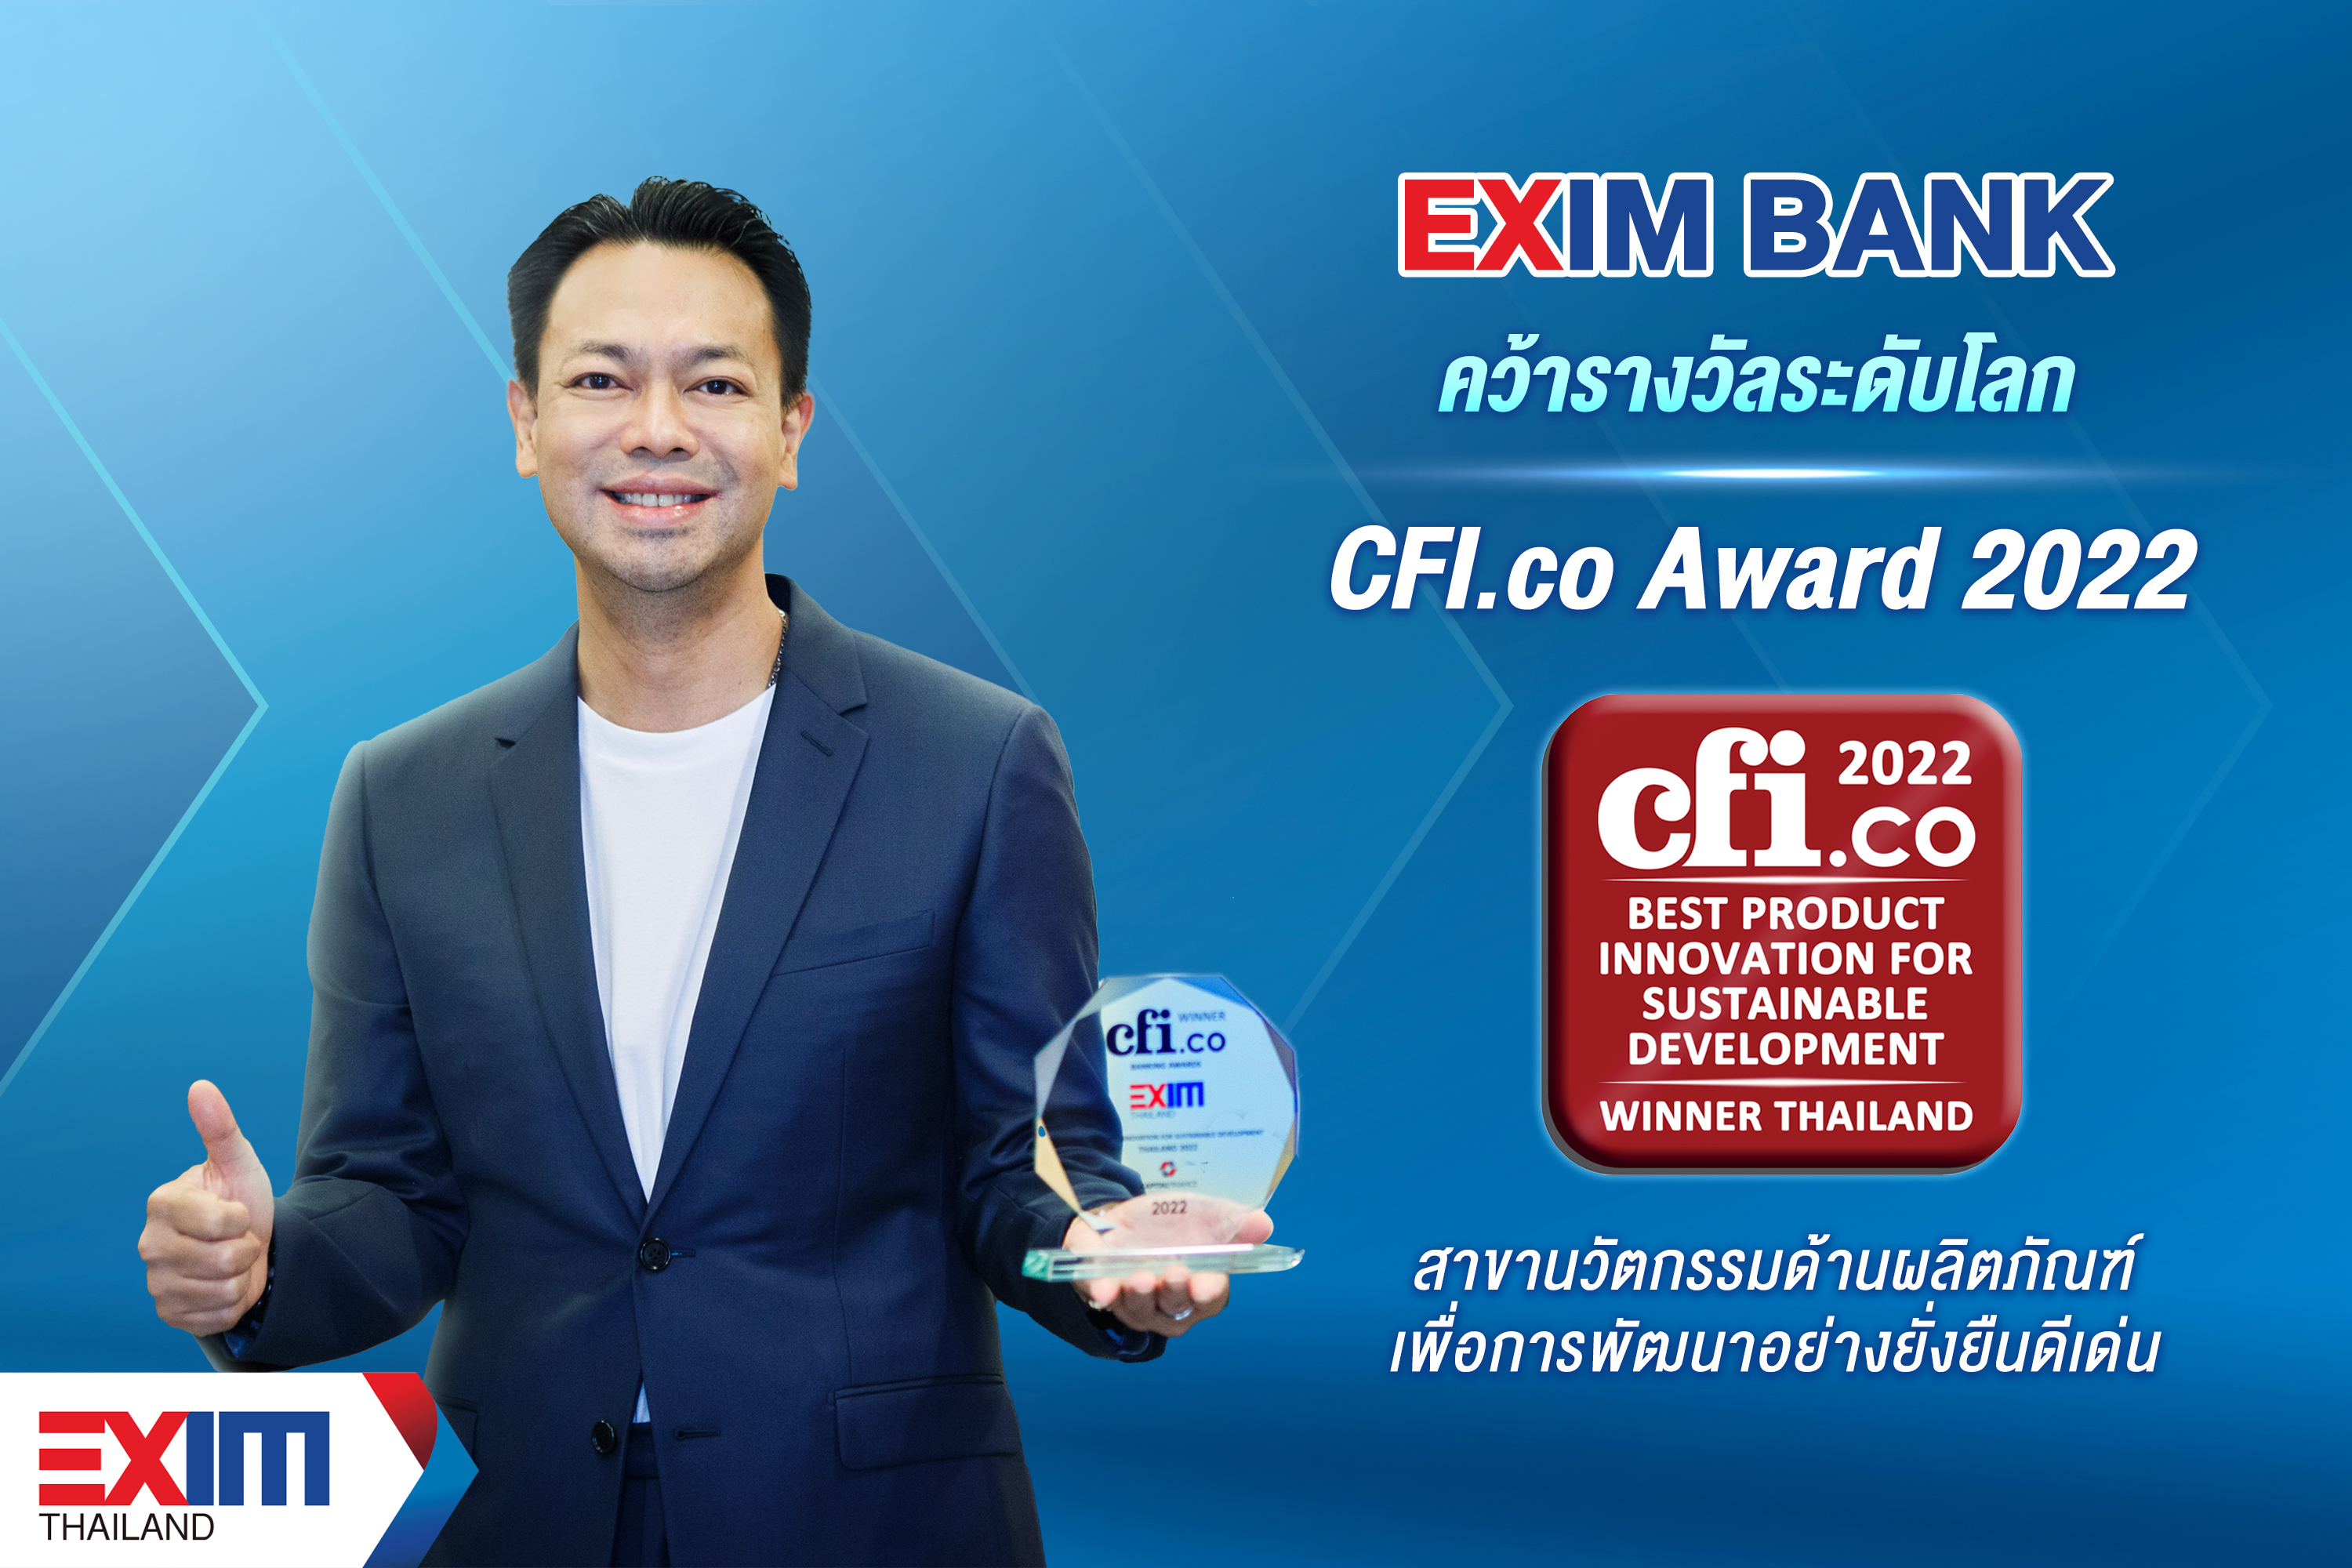 EXIM BANK คว้ารางวัลระดับโลก CFI.co Award 2022  สาขานวัตกรรมด้านผลิตภัณฑ์เพื่อการพัฒนาอย่างยั่งยืนดีเด่น  จากนิตยสาร Capital Finance International (CFI) สหราชอาณาจักร